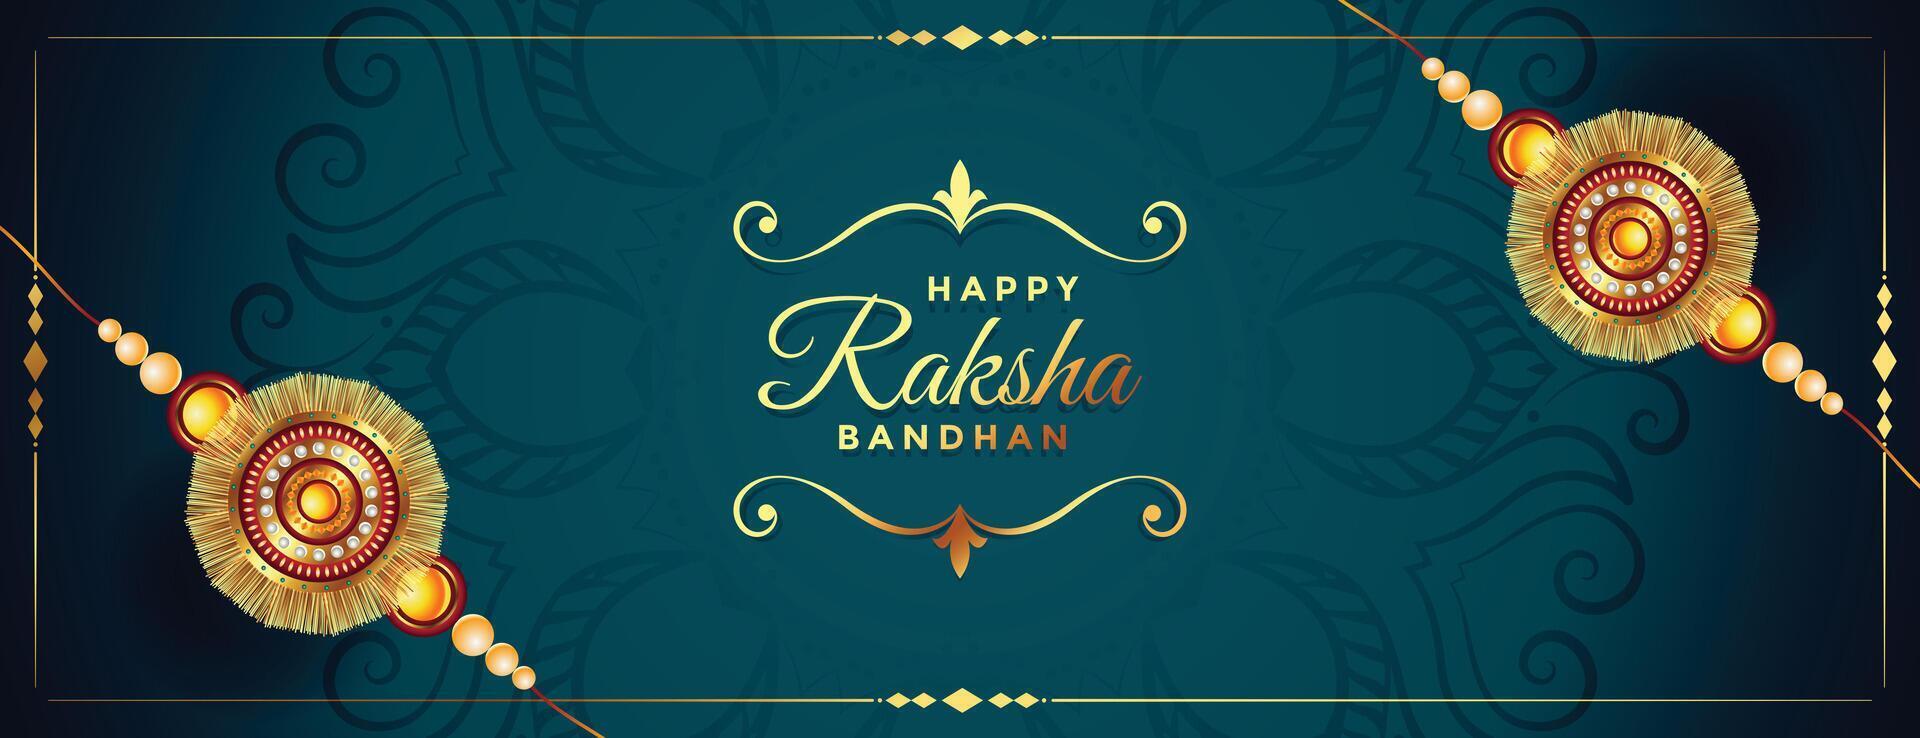 bellissimo rakhi bandiera per contento Raksha bandhan vettore